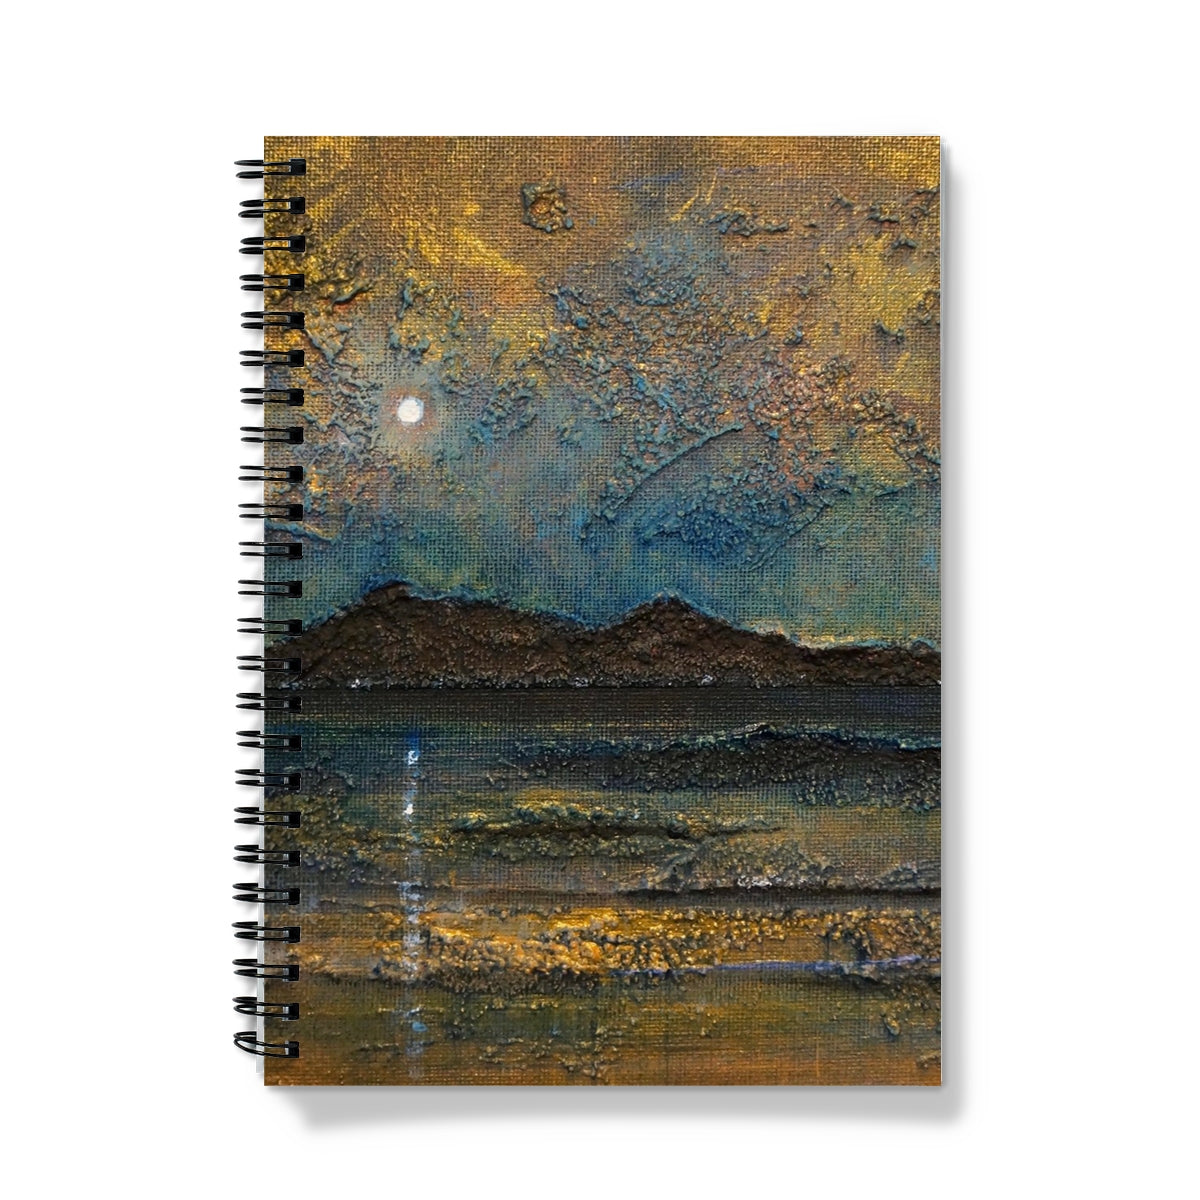 Arran Moonlight Art Gifts Notebook-Journals & Notebooks-Arran Art Gallery-A4-Graph-Paintings, Prints, Homeware, Art Gifts From Scotland By Scottish Artist Kevin Hunter